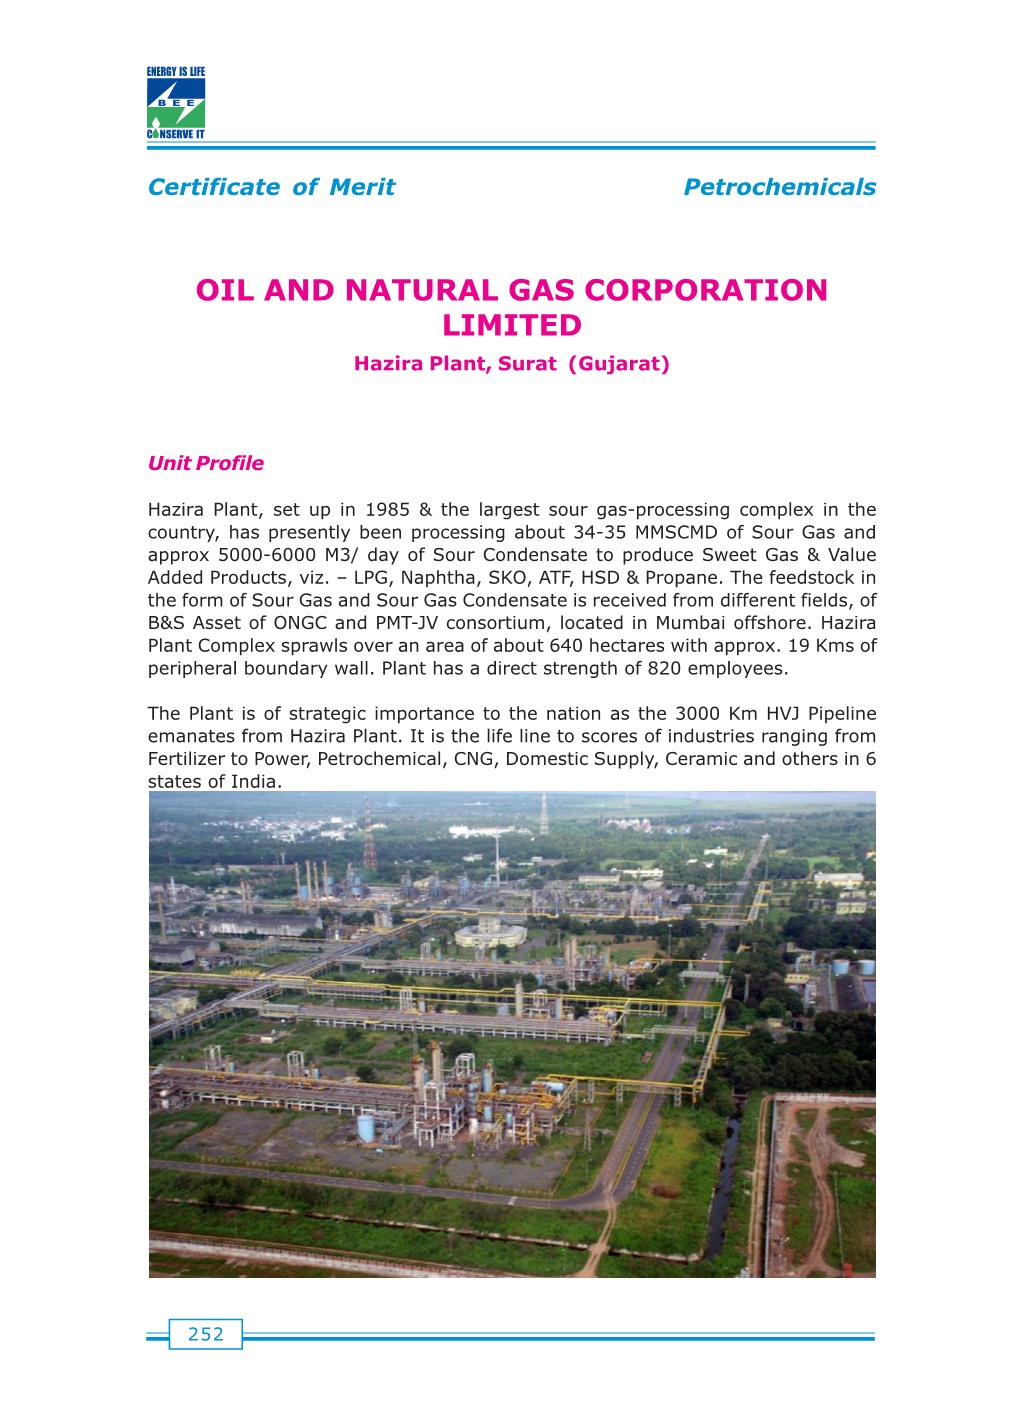 Oil and Natural Gas Corporation Ltd. Hazira Plant, Surat (Gujarat)